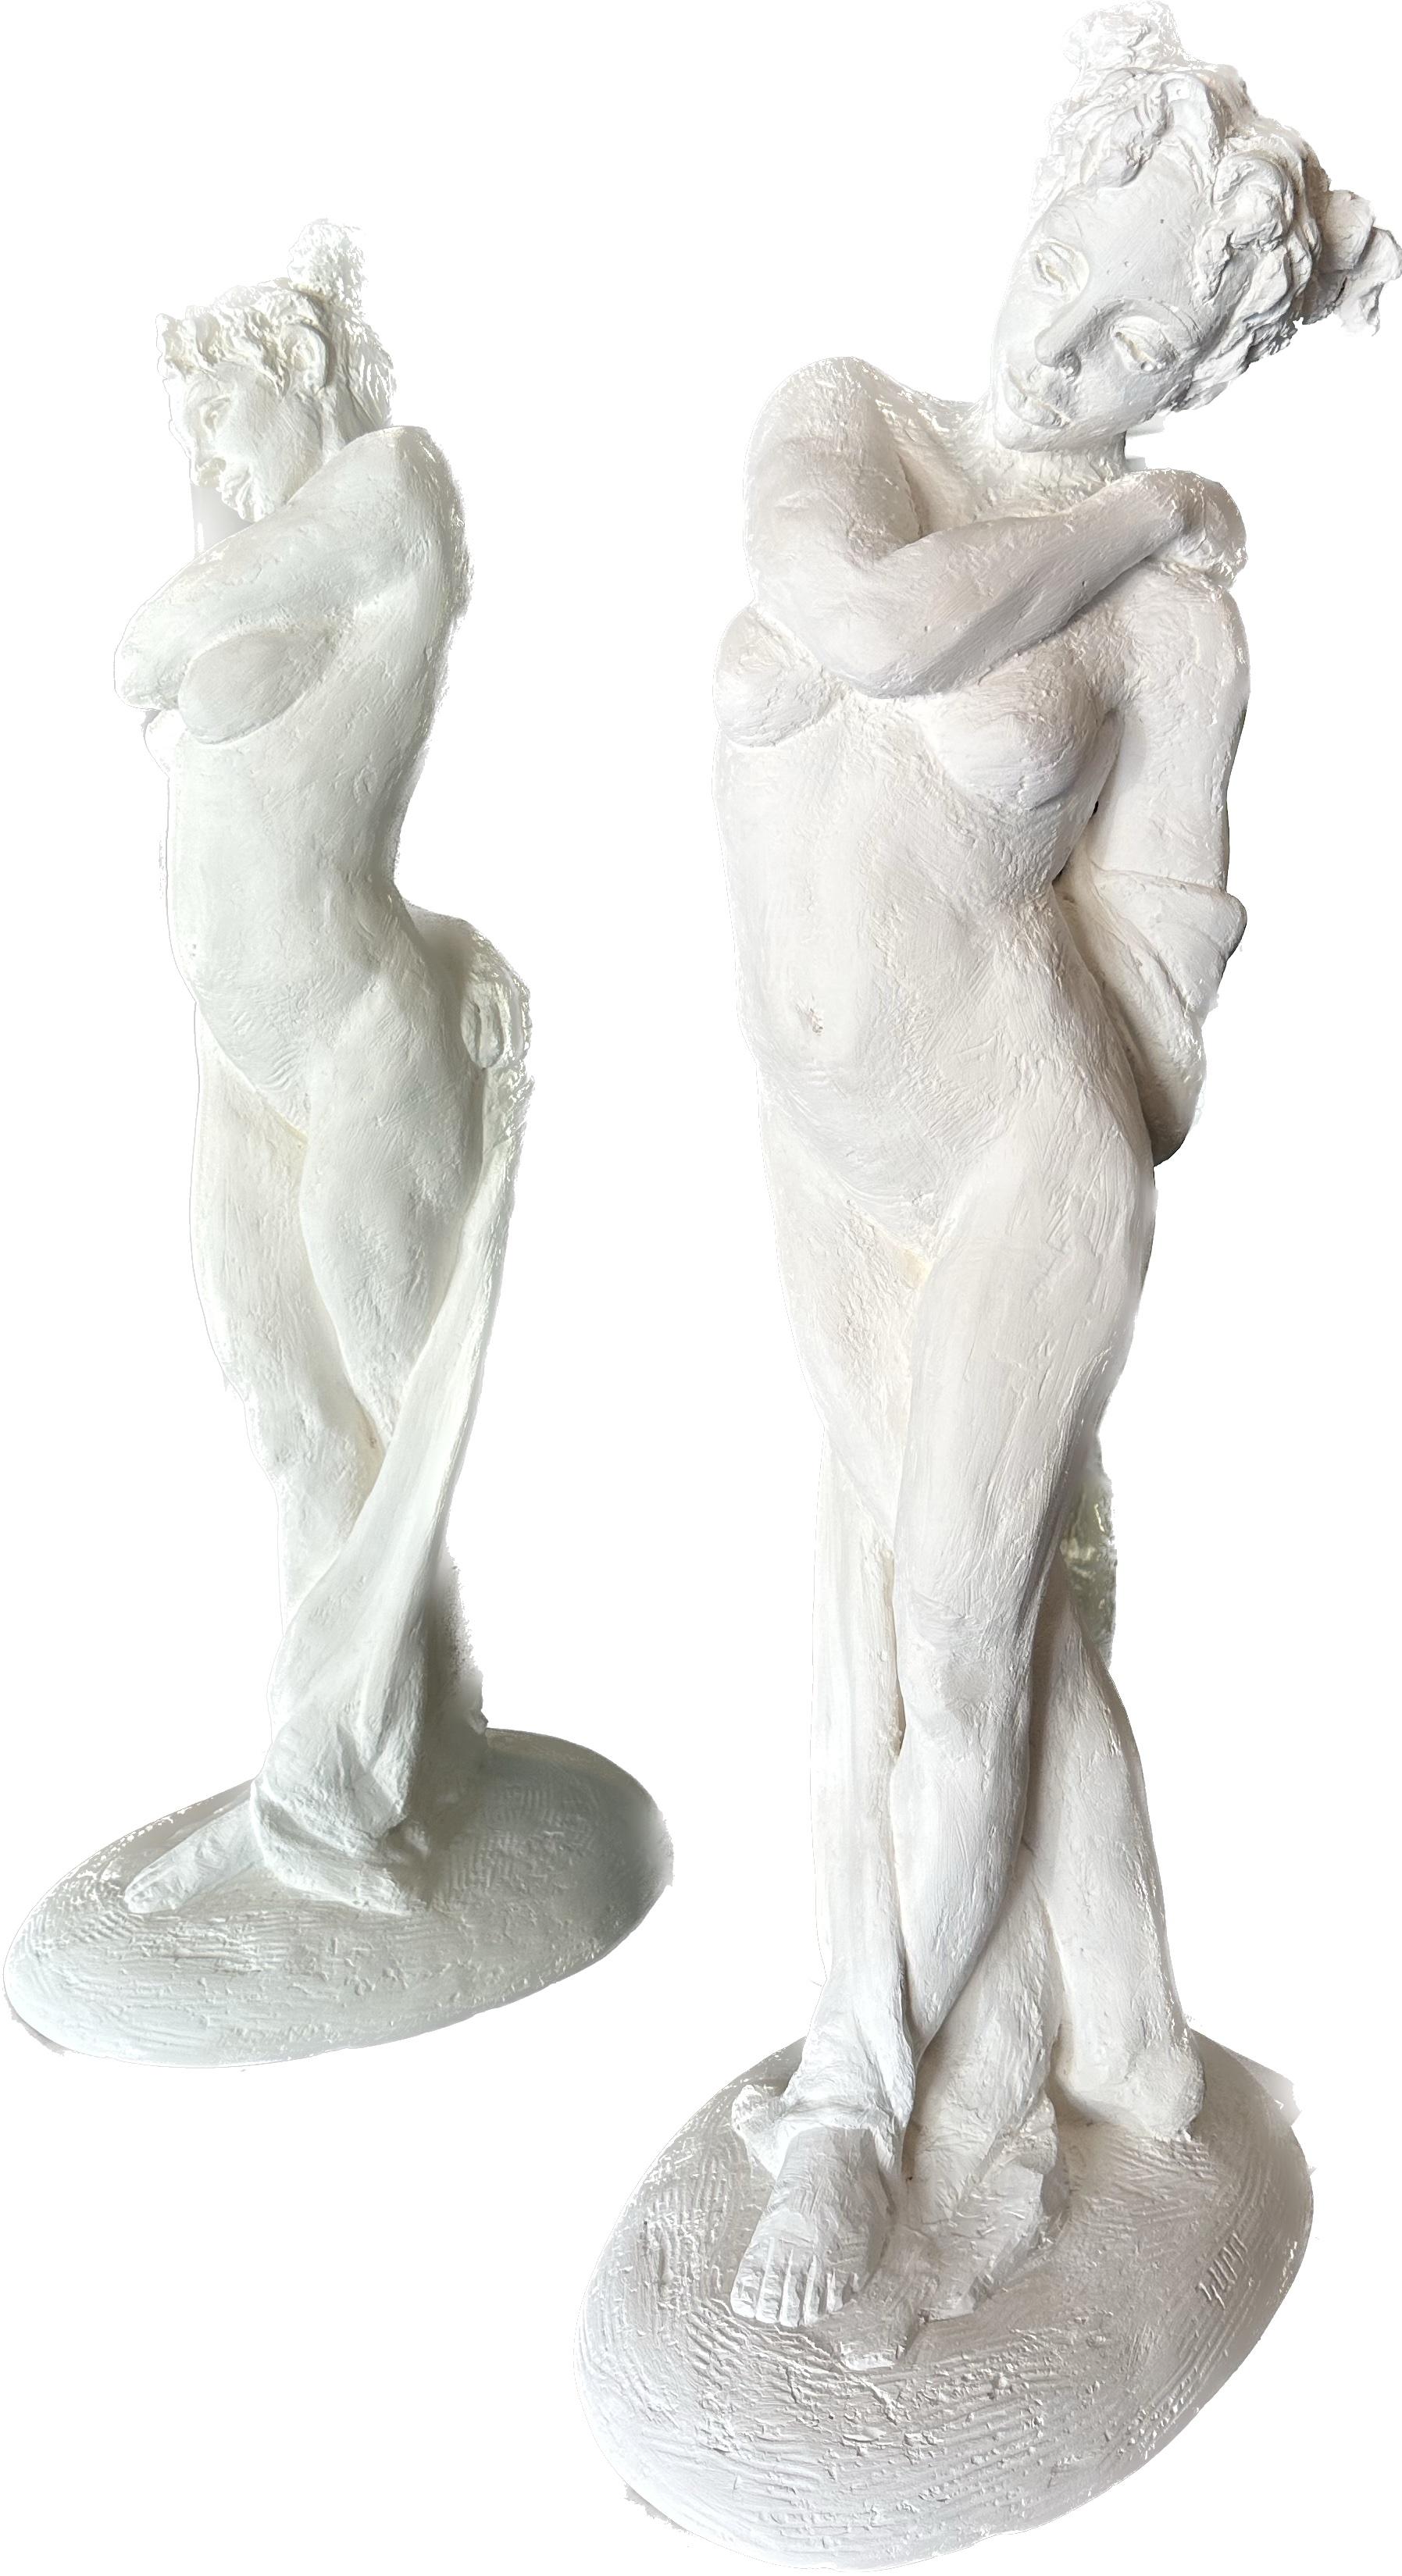 Karapet Balakeseryan  (Garo) Figurative Sculpture - Standing Nude, Figure, Sculpture, Hydro Stone, Dust Marble Handmade by Garo